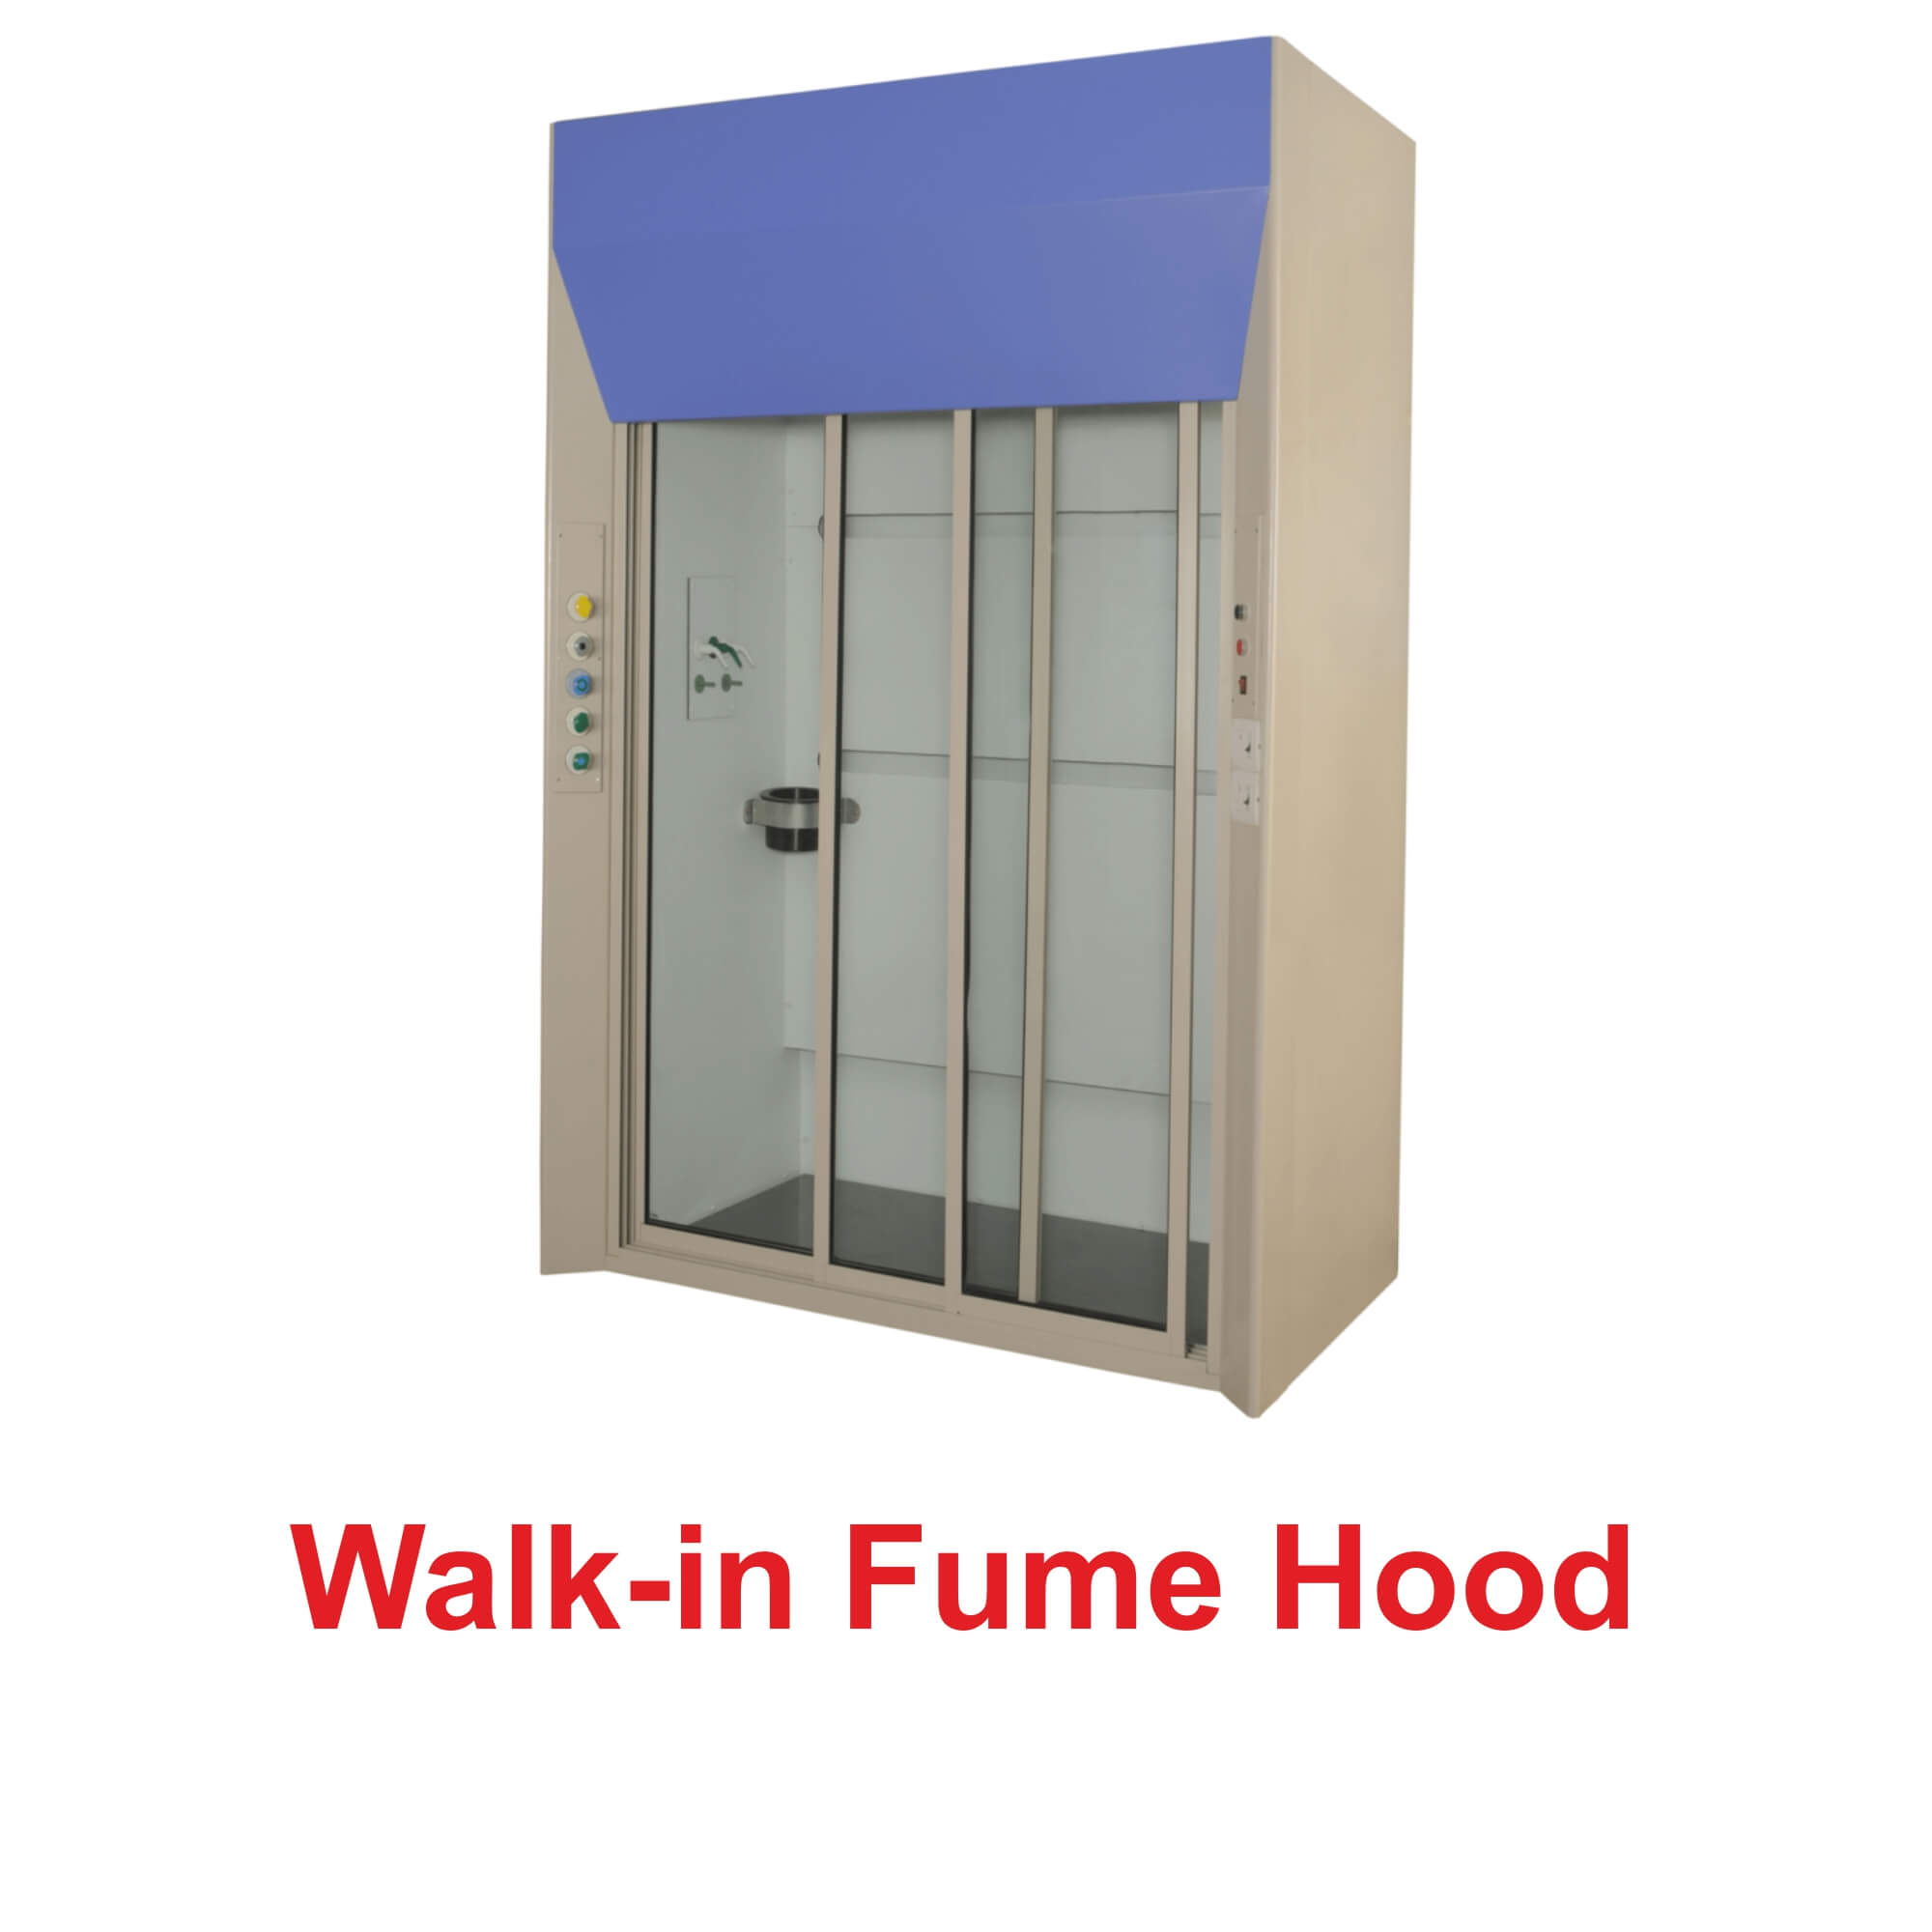 Walk-in Fume Hood Manufacturer in India